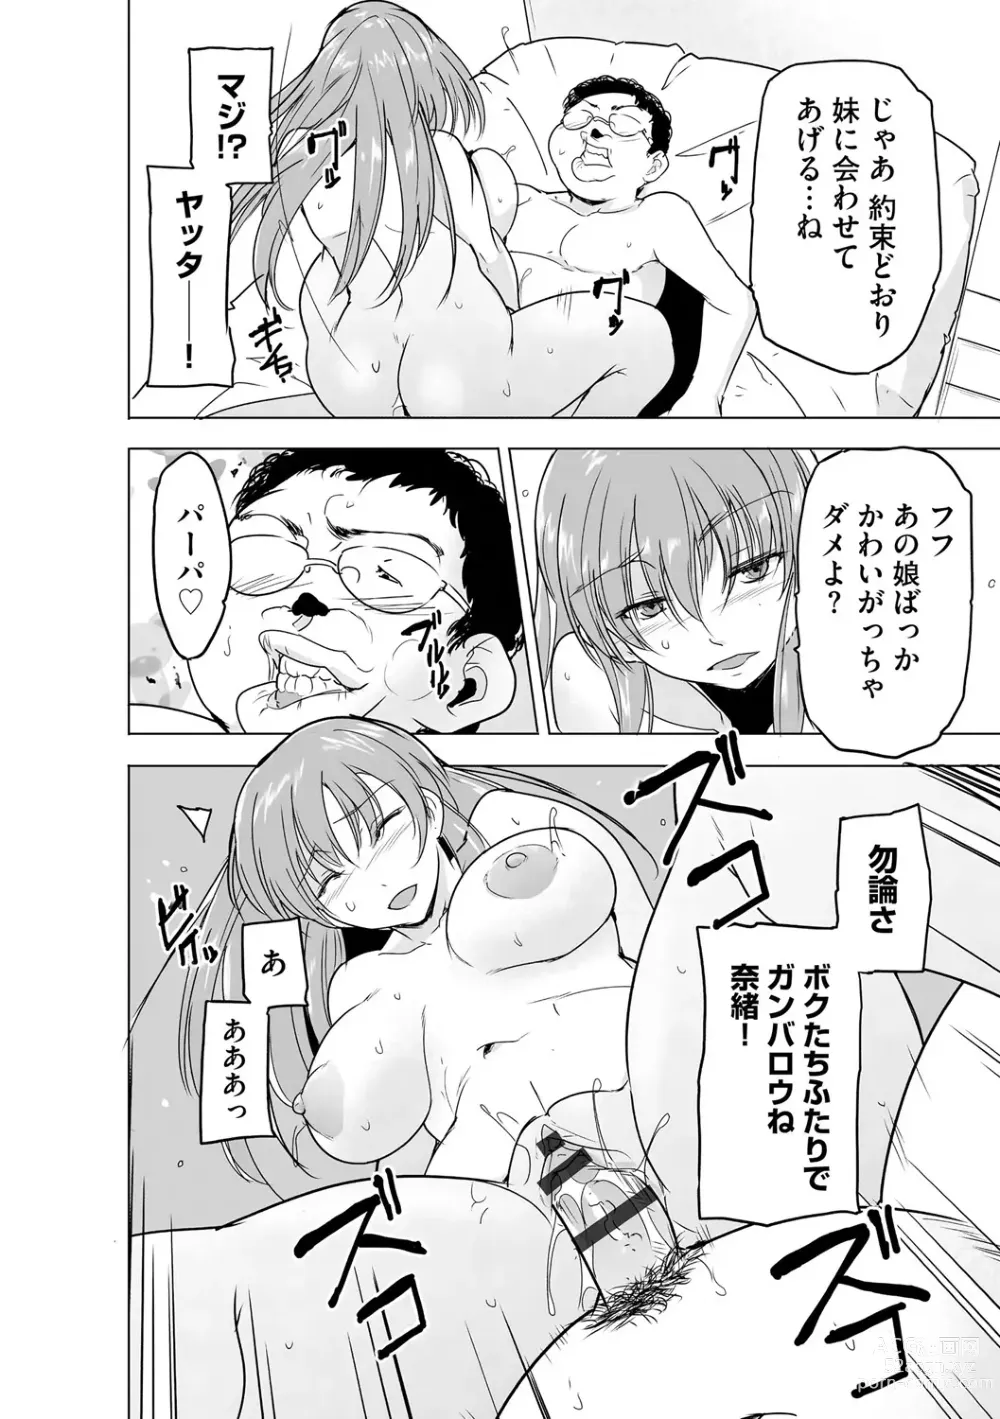 Page 334 of manga Cyberia Plus Vol. 19